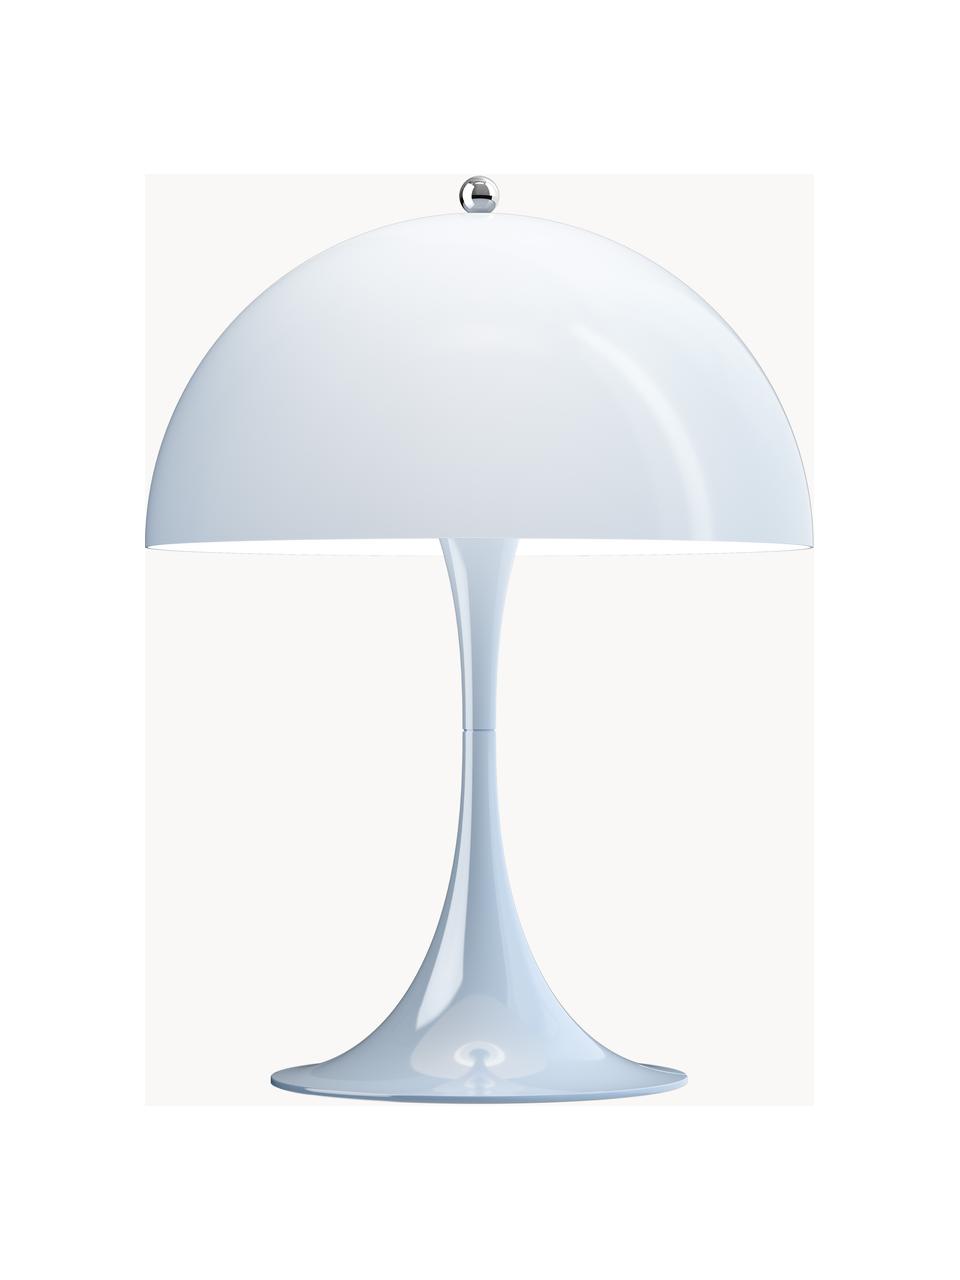 Dimbare LED tafellamp Panthella met timerfunctie, H 34 cm, Lampenkap: acrylglas, Acrylglas grijsblauw, Ø 25 x H 34 cm